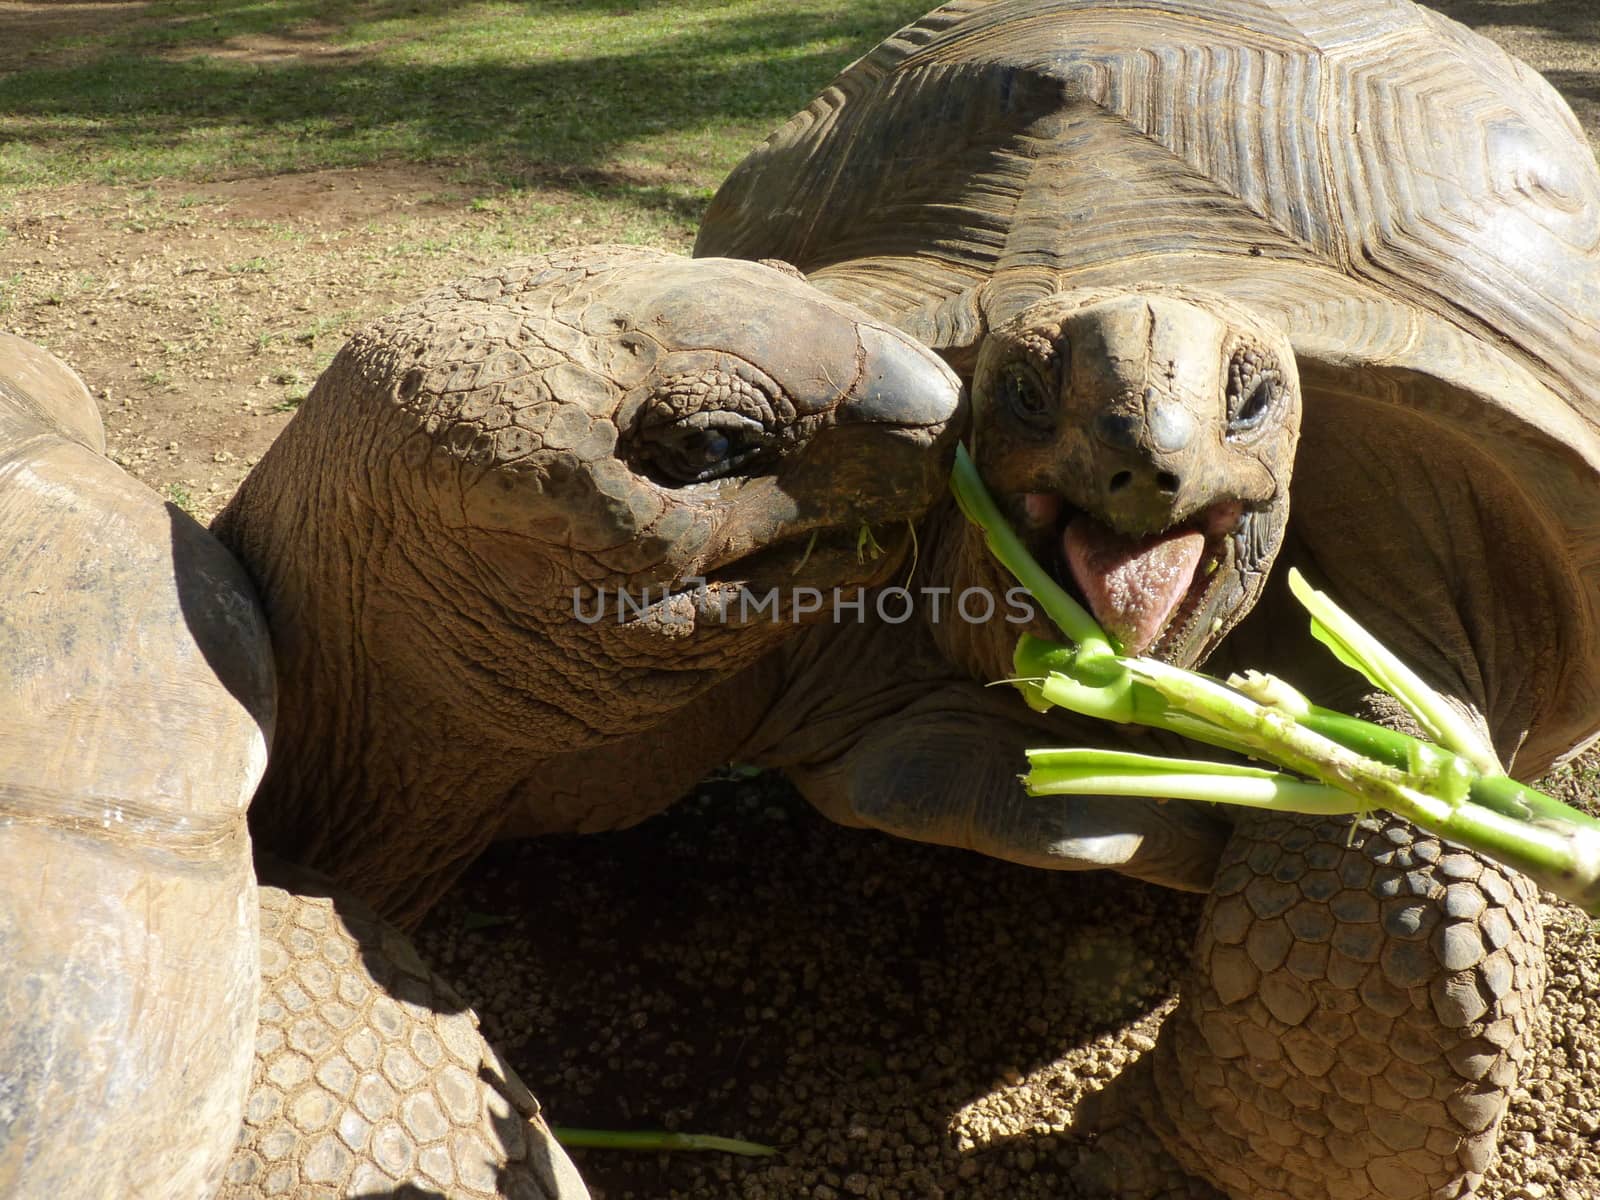 Giant Turtles by nicousnake